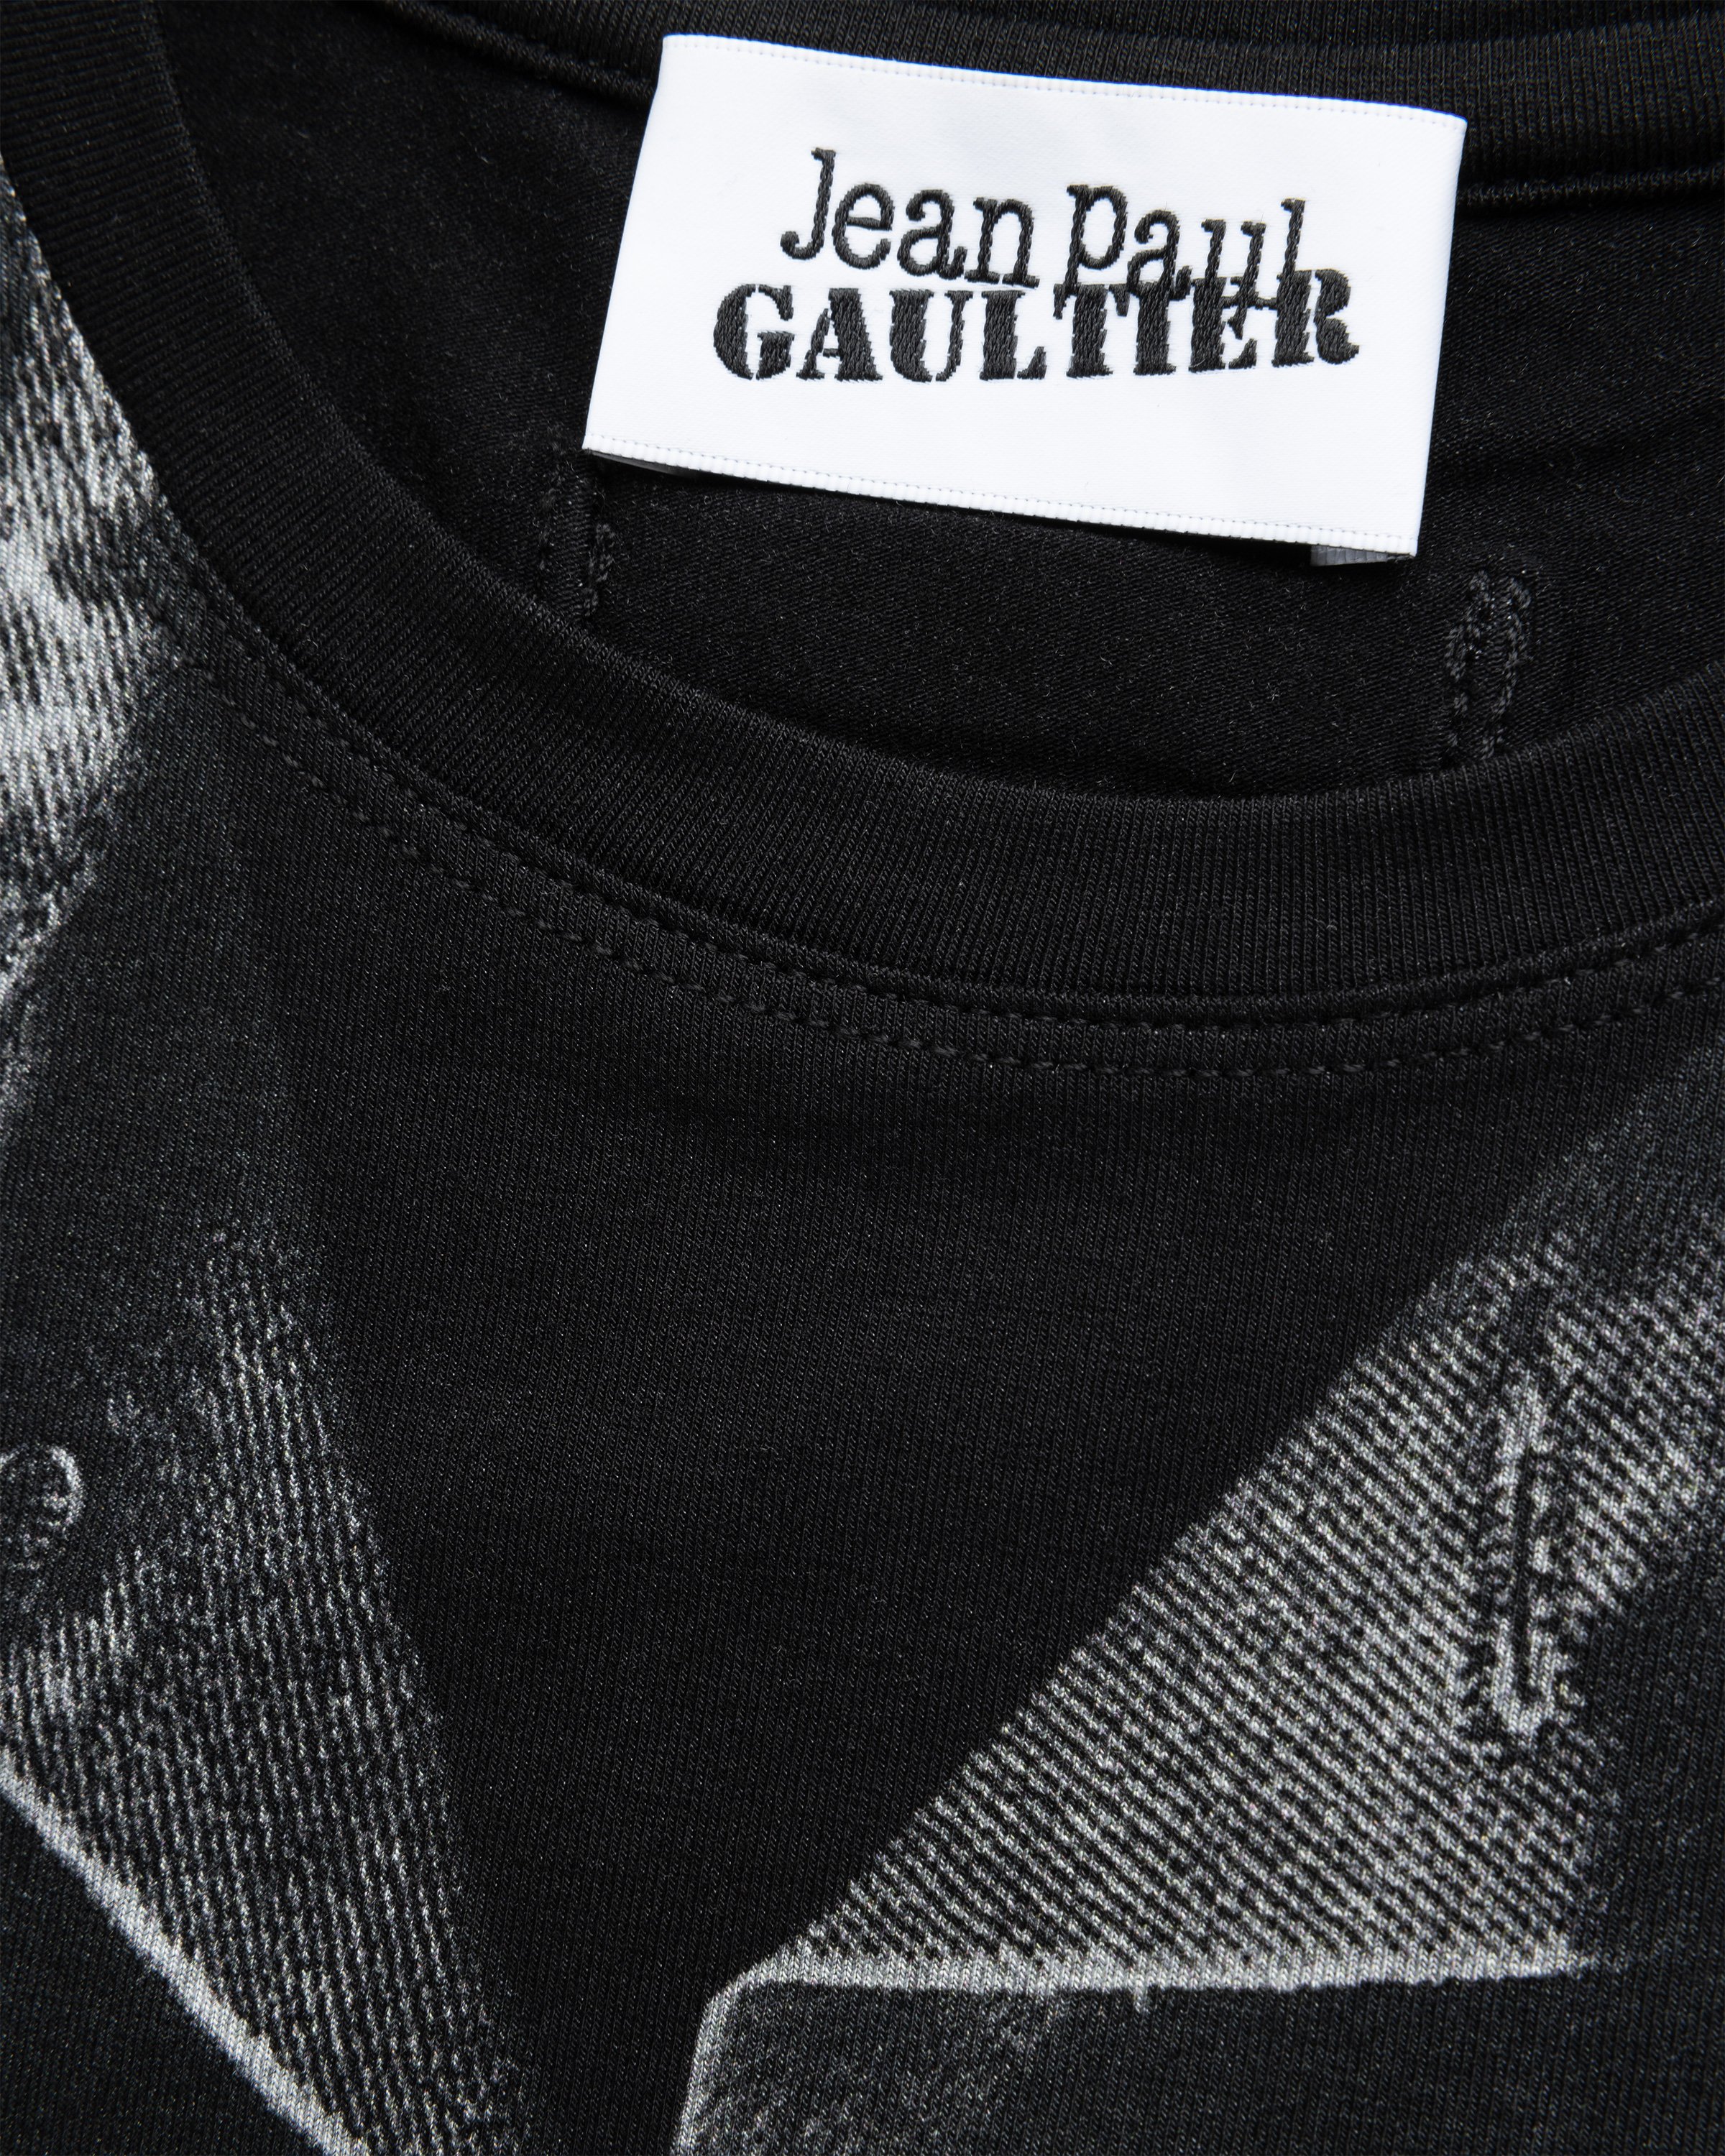 Jean Paul Gaultier - Denim Trompe L'oeil T-Shirt Black/Gray - Clothing - Black - Image 7